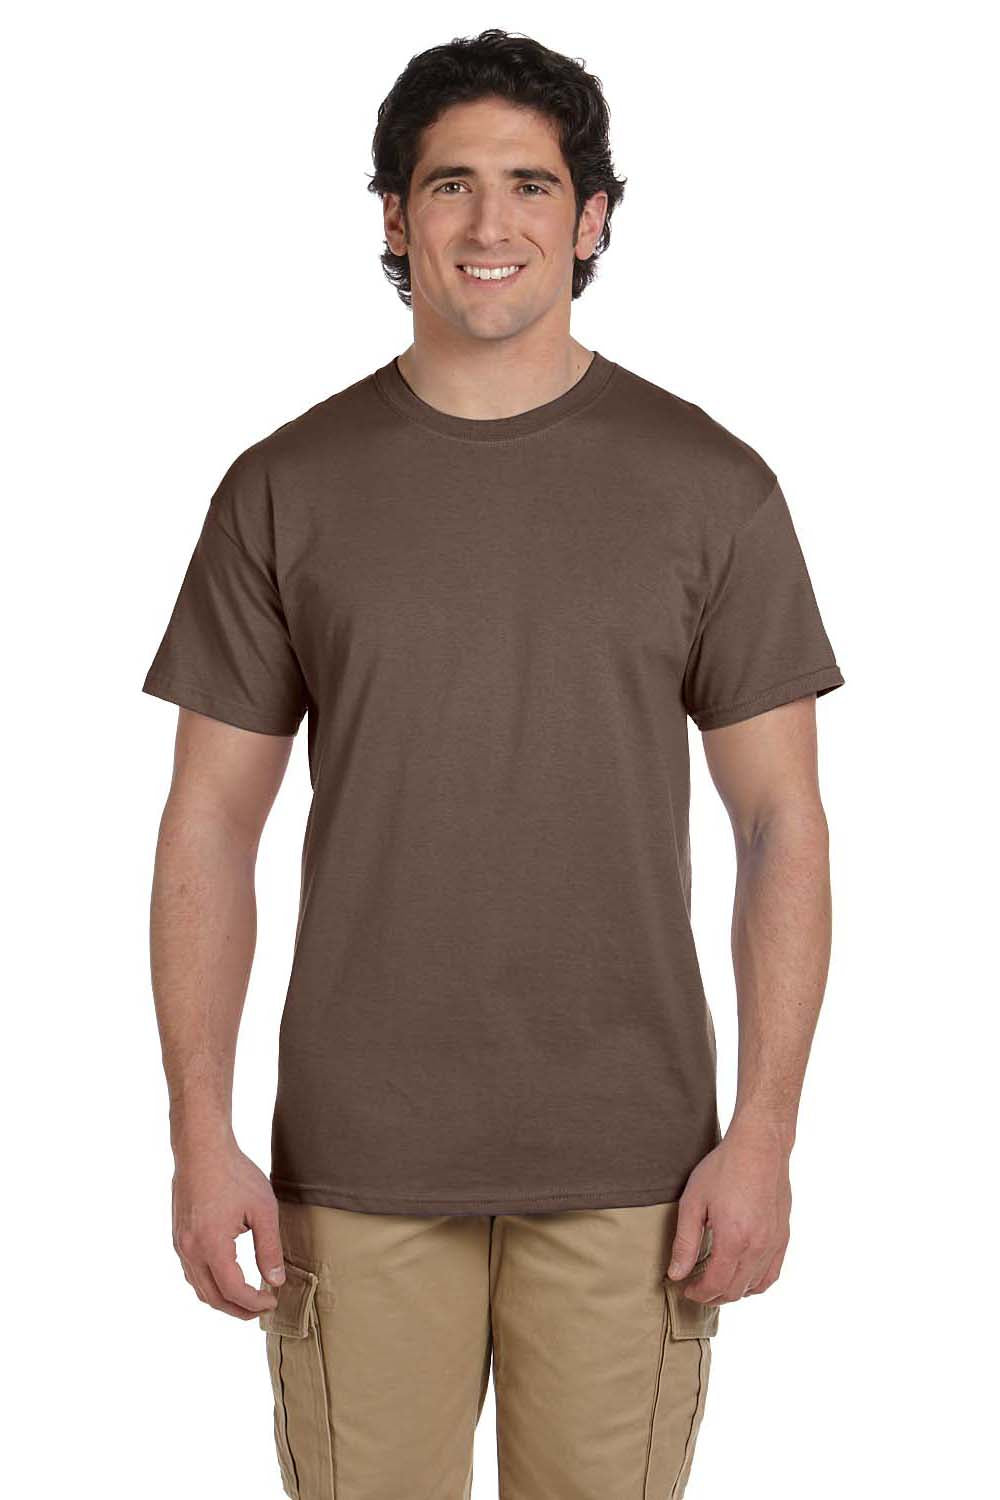 Hanes 5170 Mens EcoSmart Short Sleeve Crewneck T-Shirt Heather Brown Front